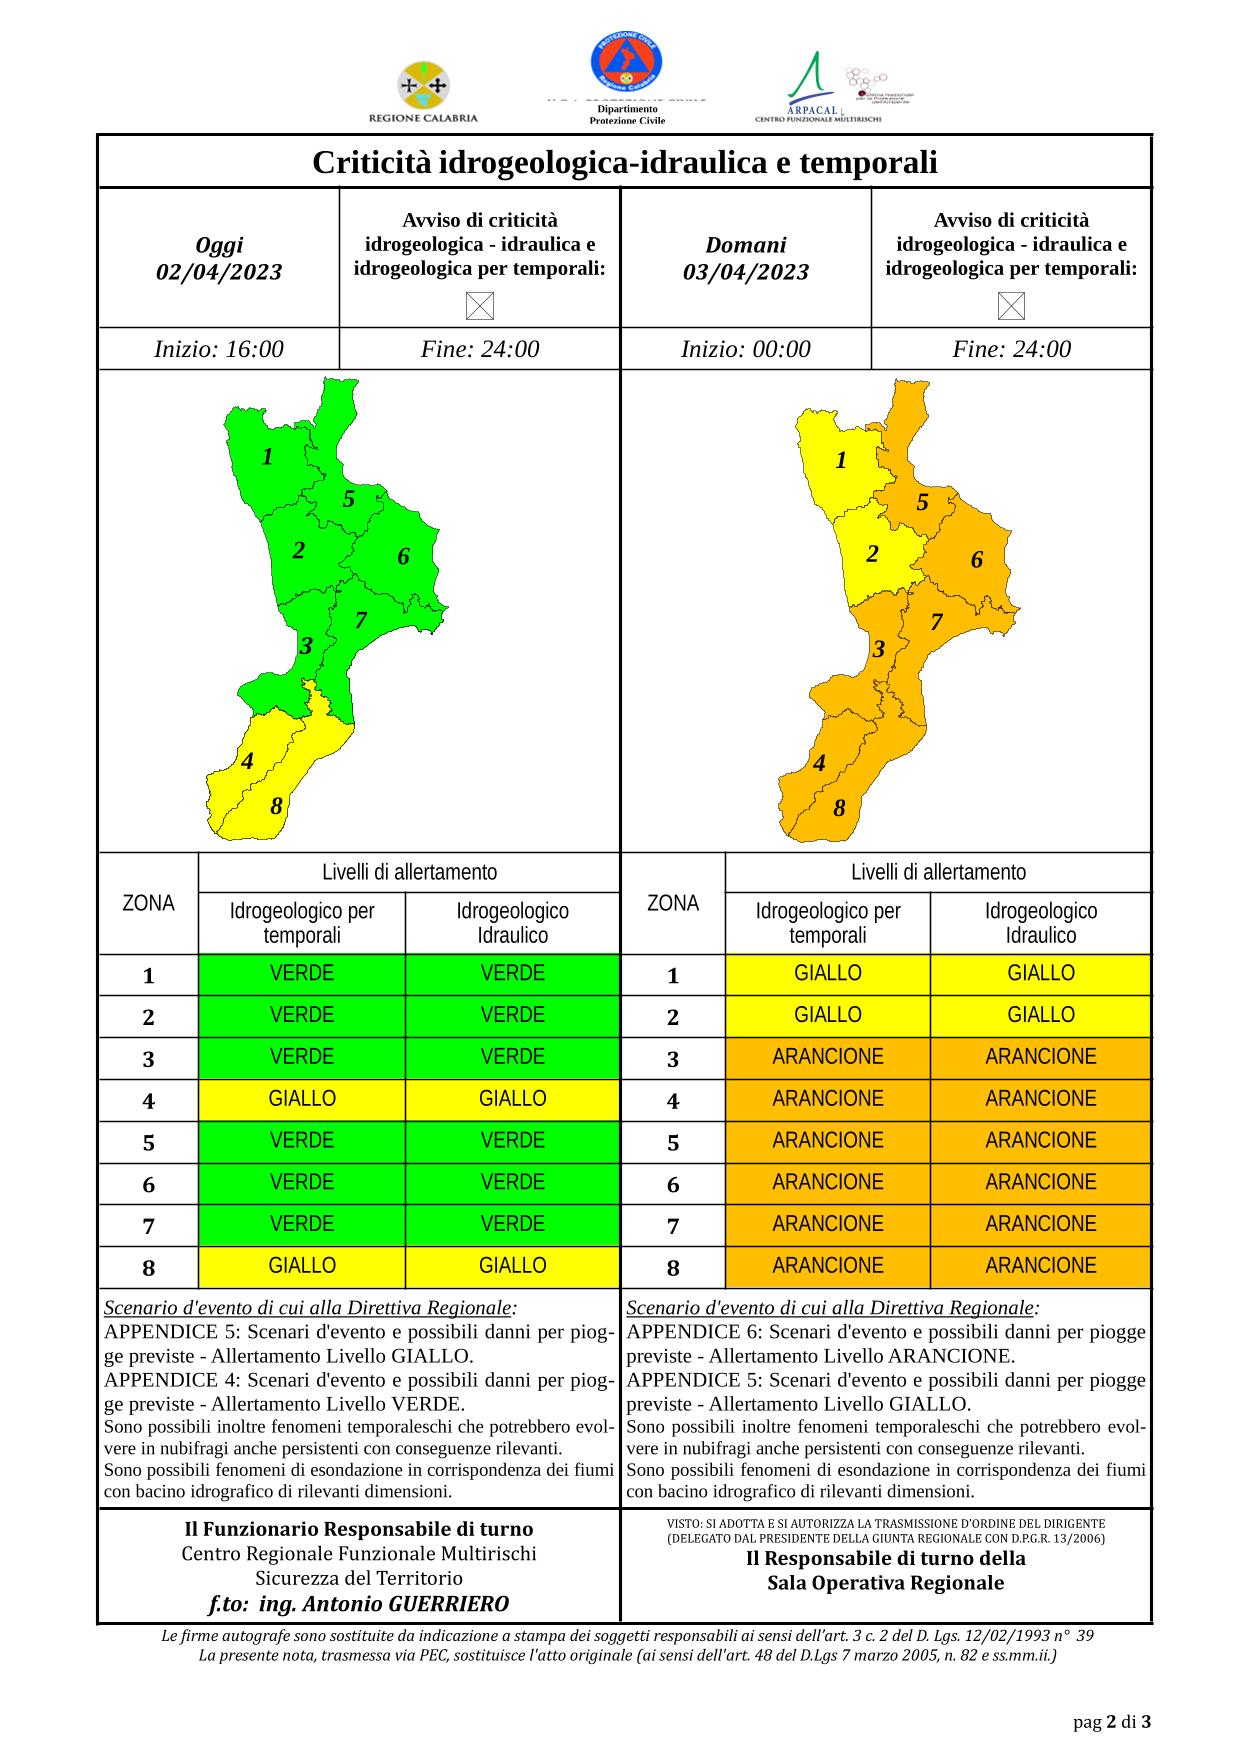 Criticità idrogeologica-idraulica e temporali in Calabria 03-04-2023